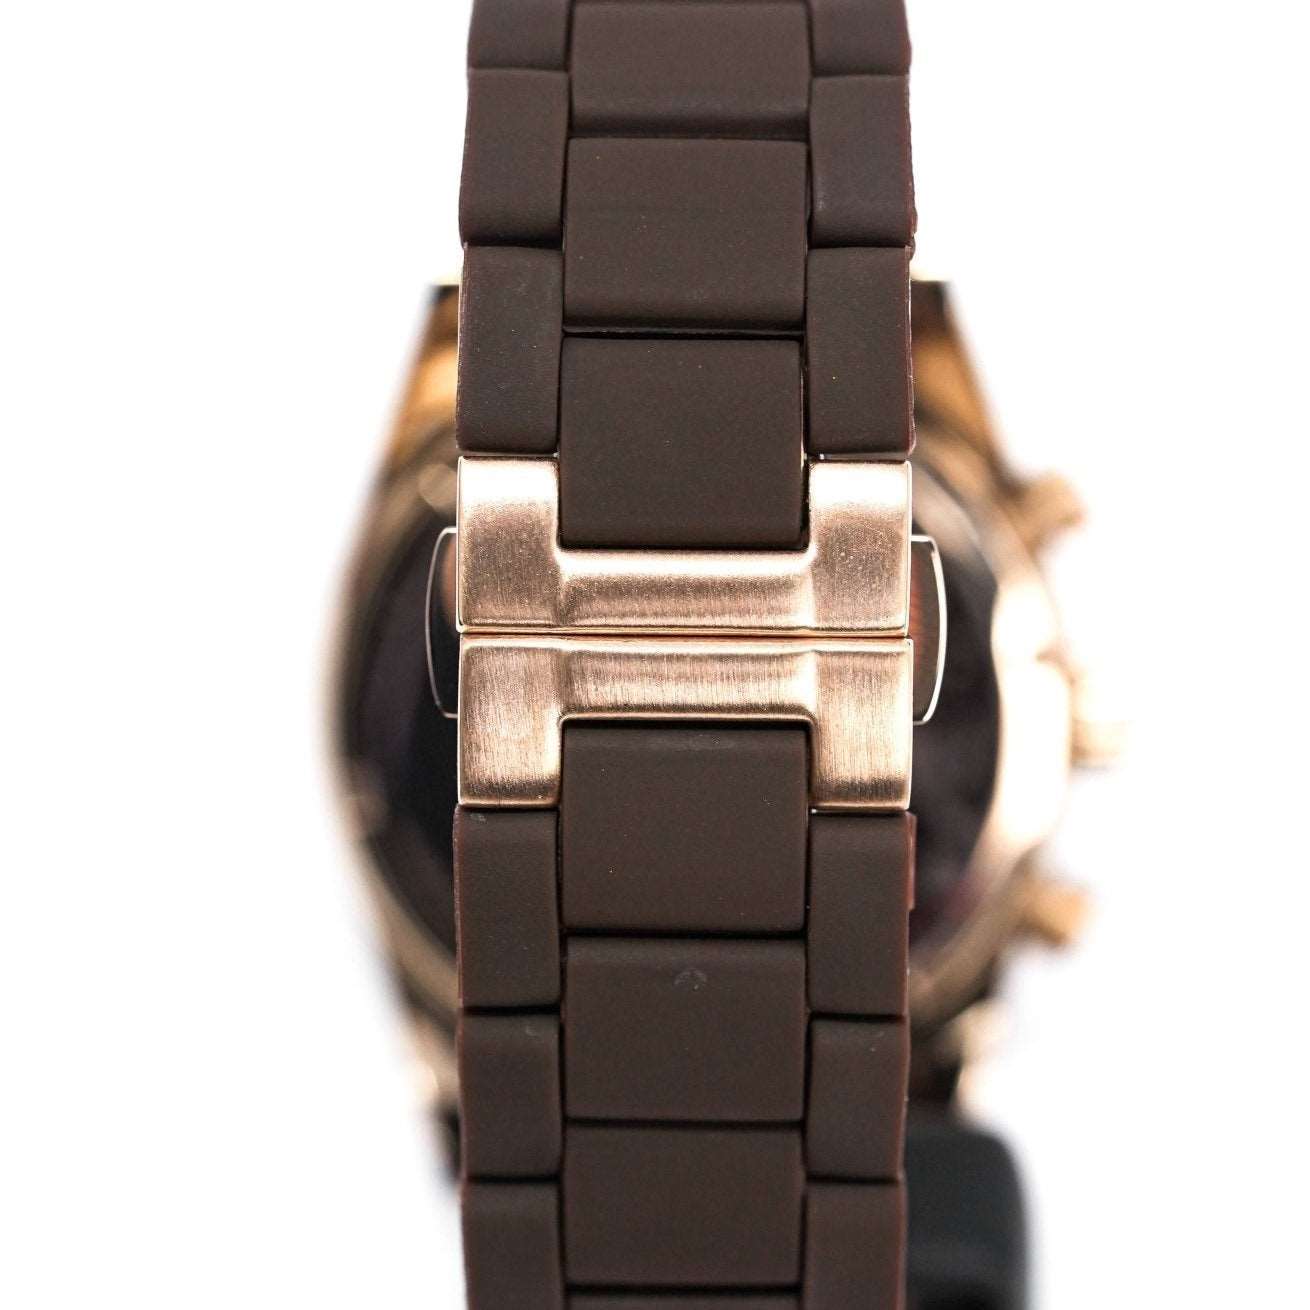 Emporio Armani AR5891 Ladies Chronograph Brown Watch